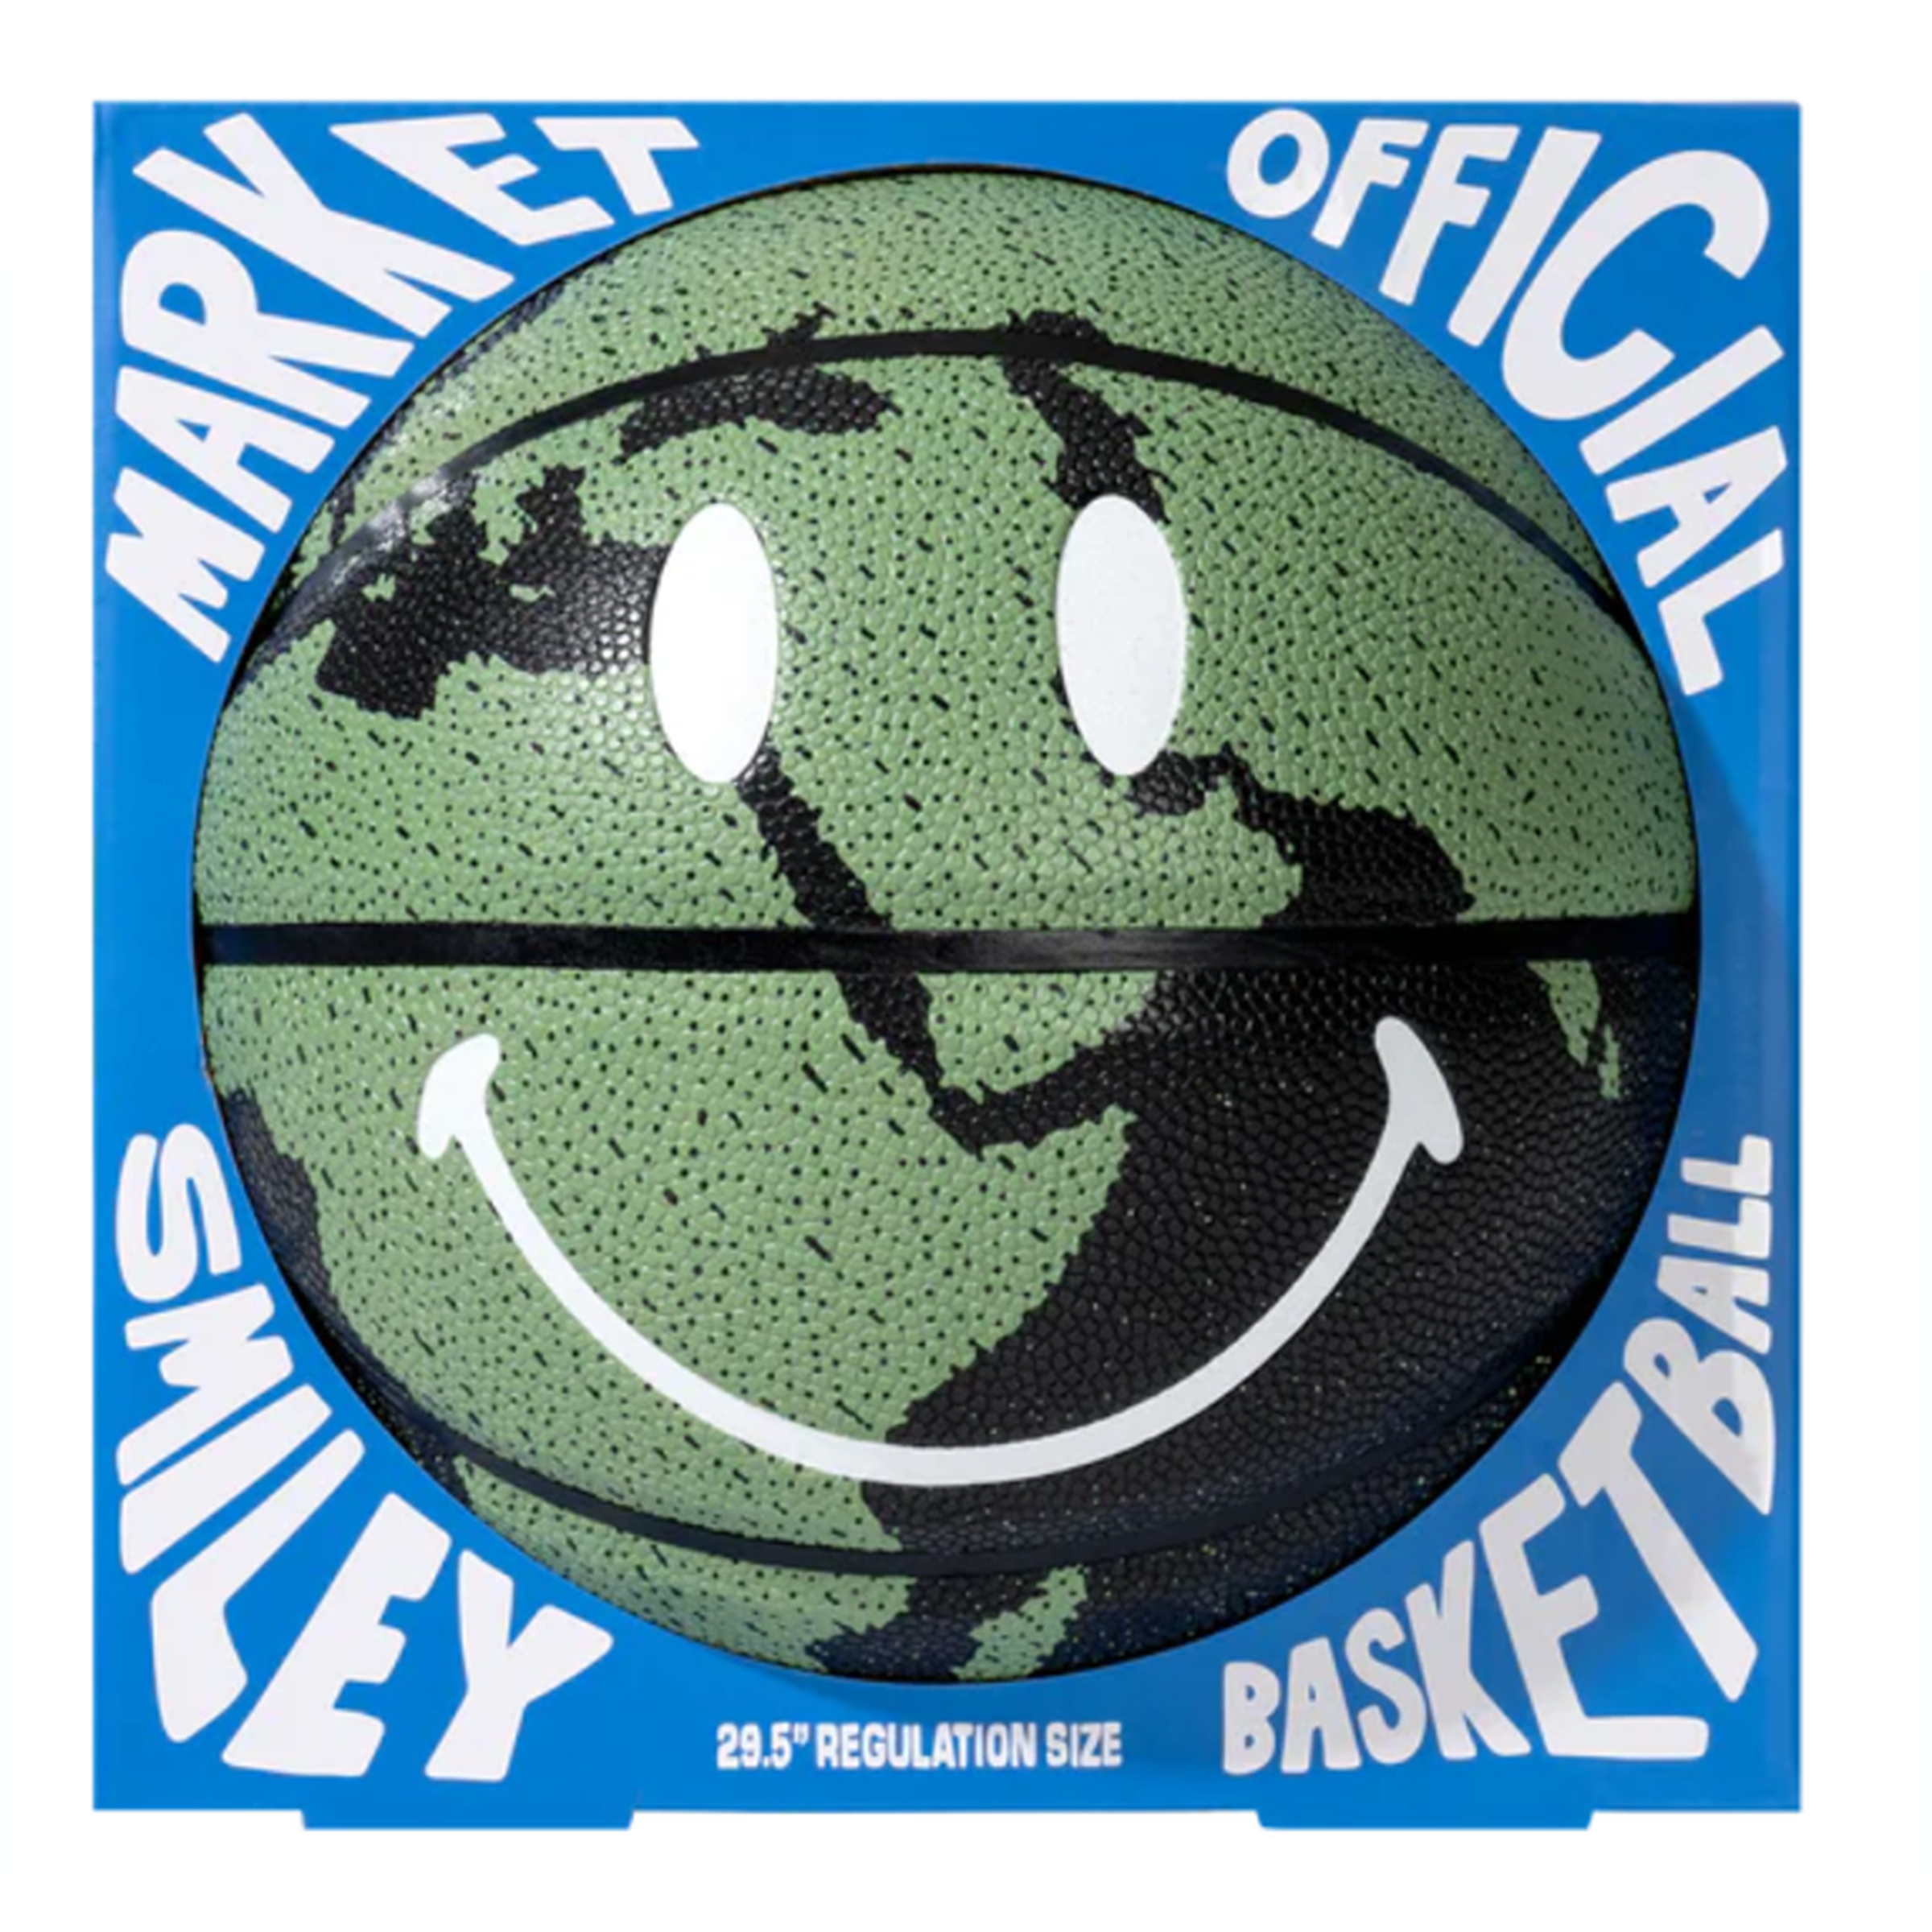 Market "Bit Map" Smiley Basketball